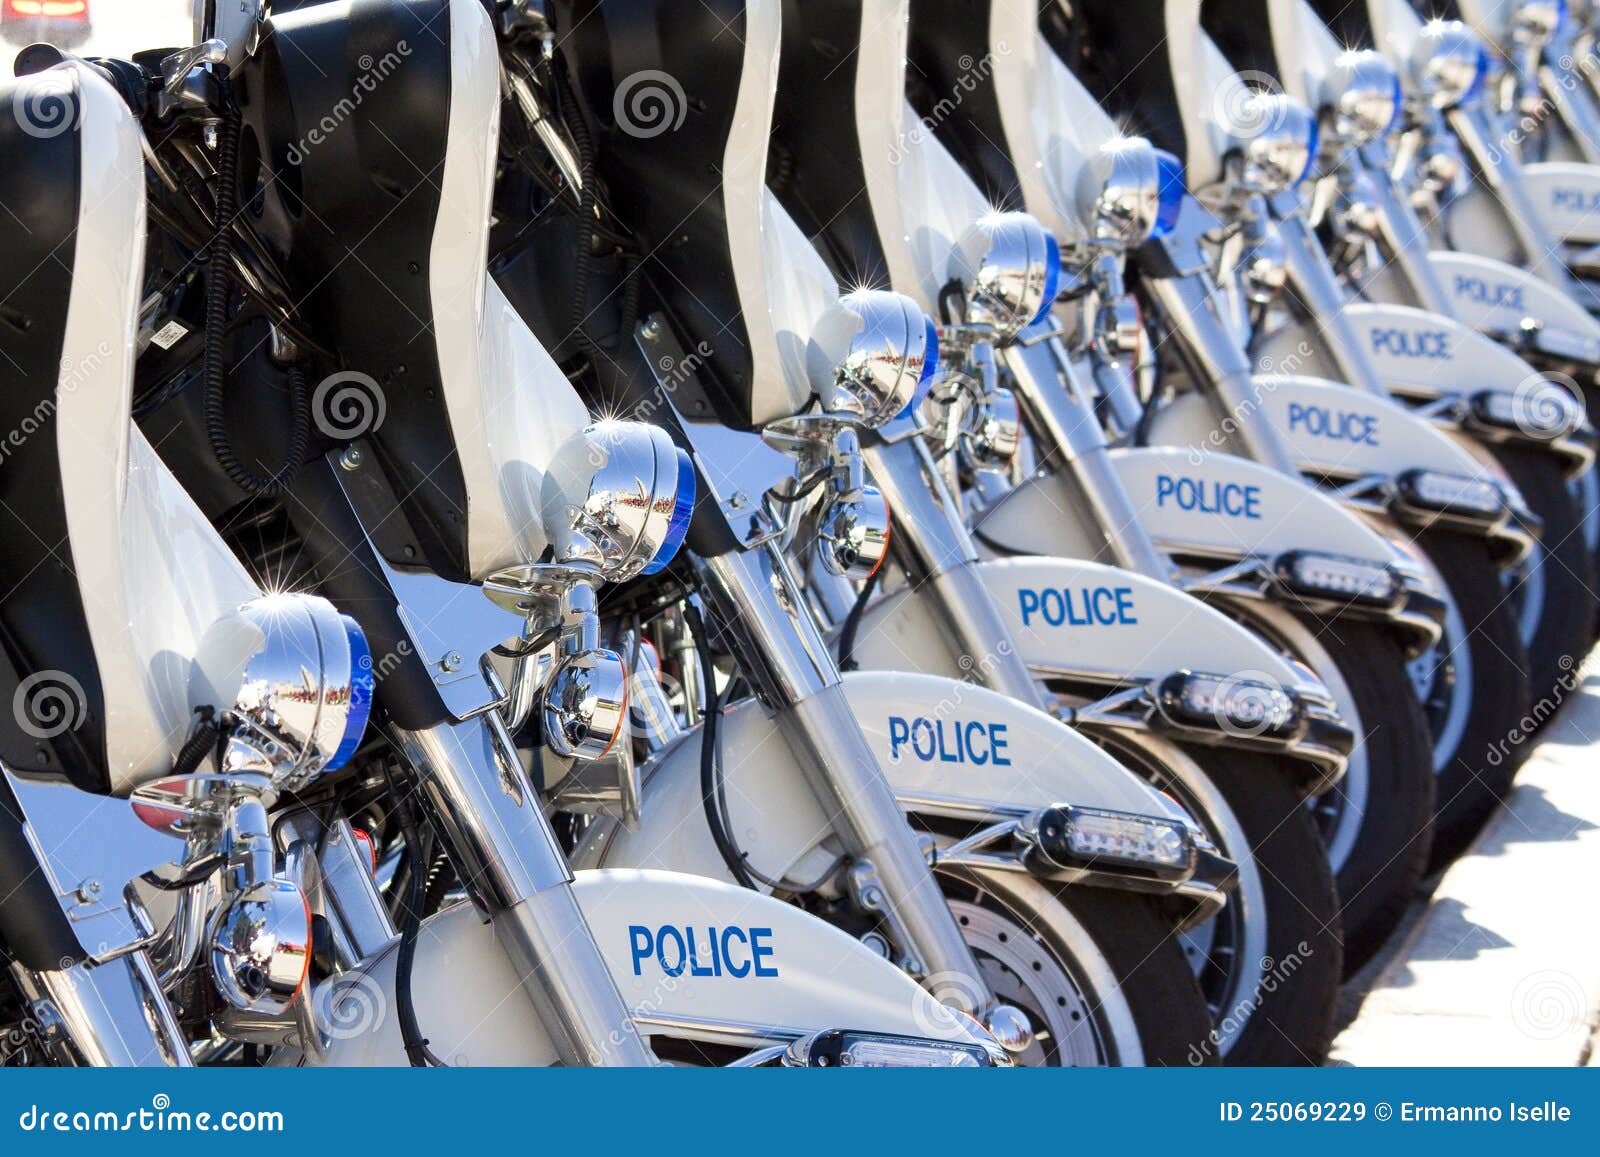 police motorbikes aligned